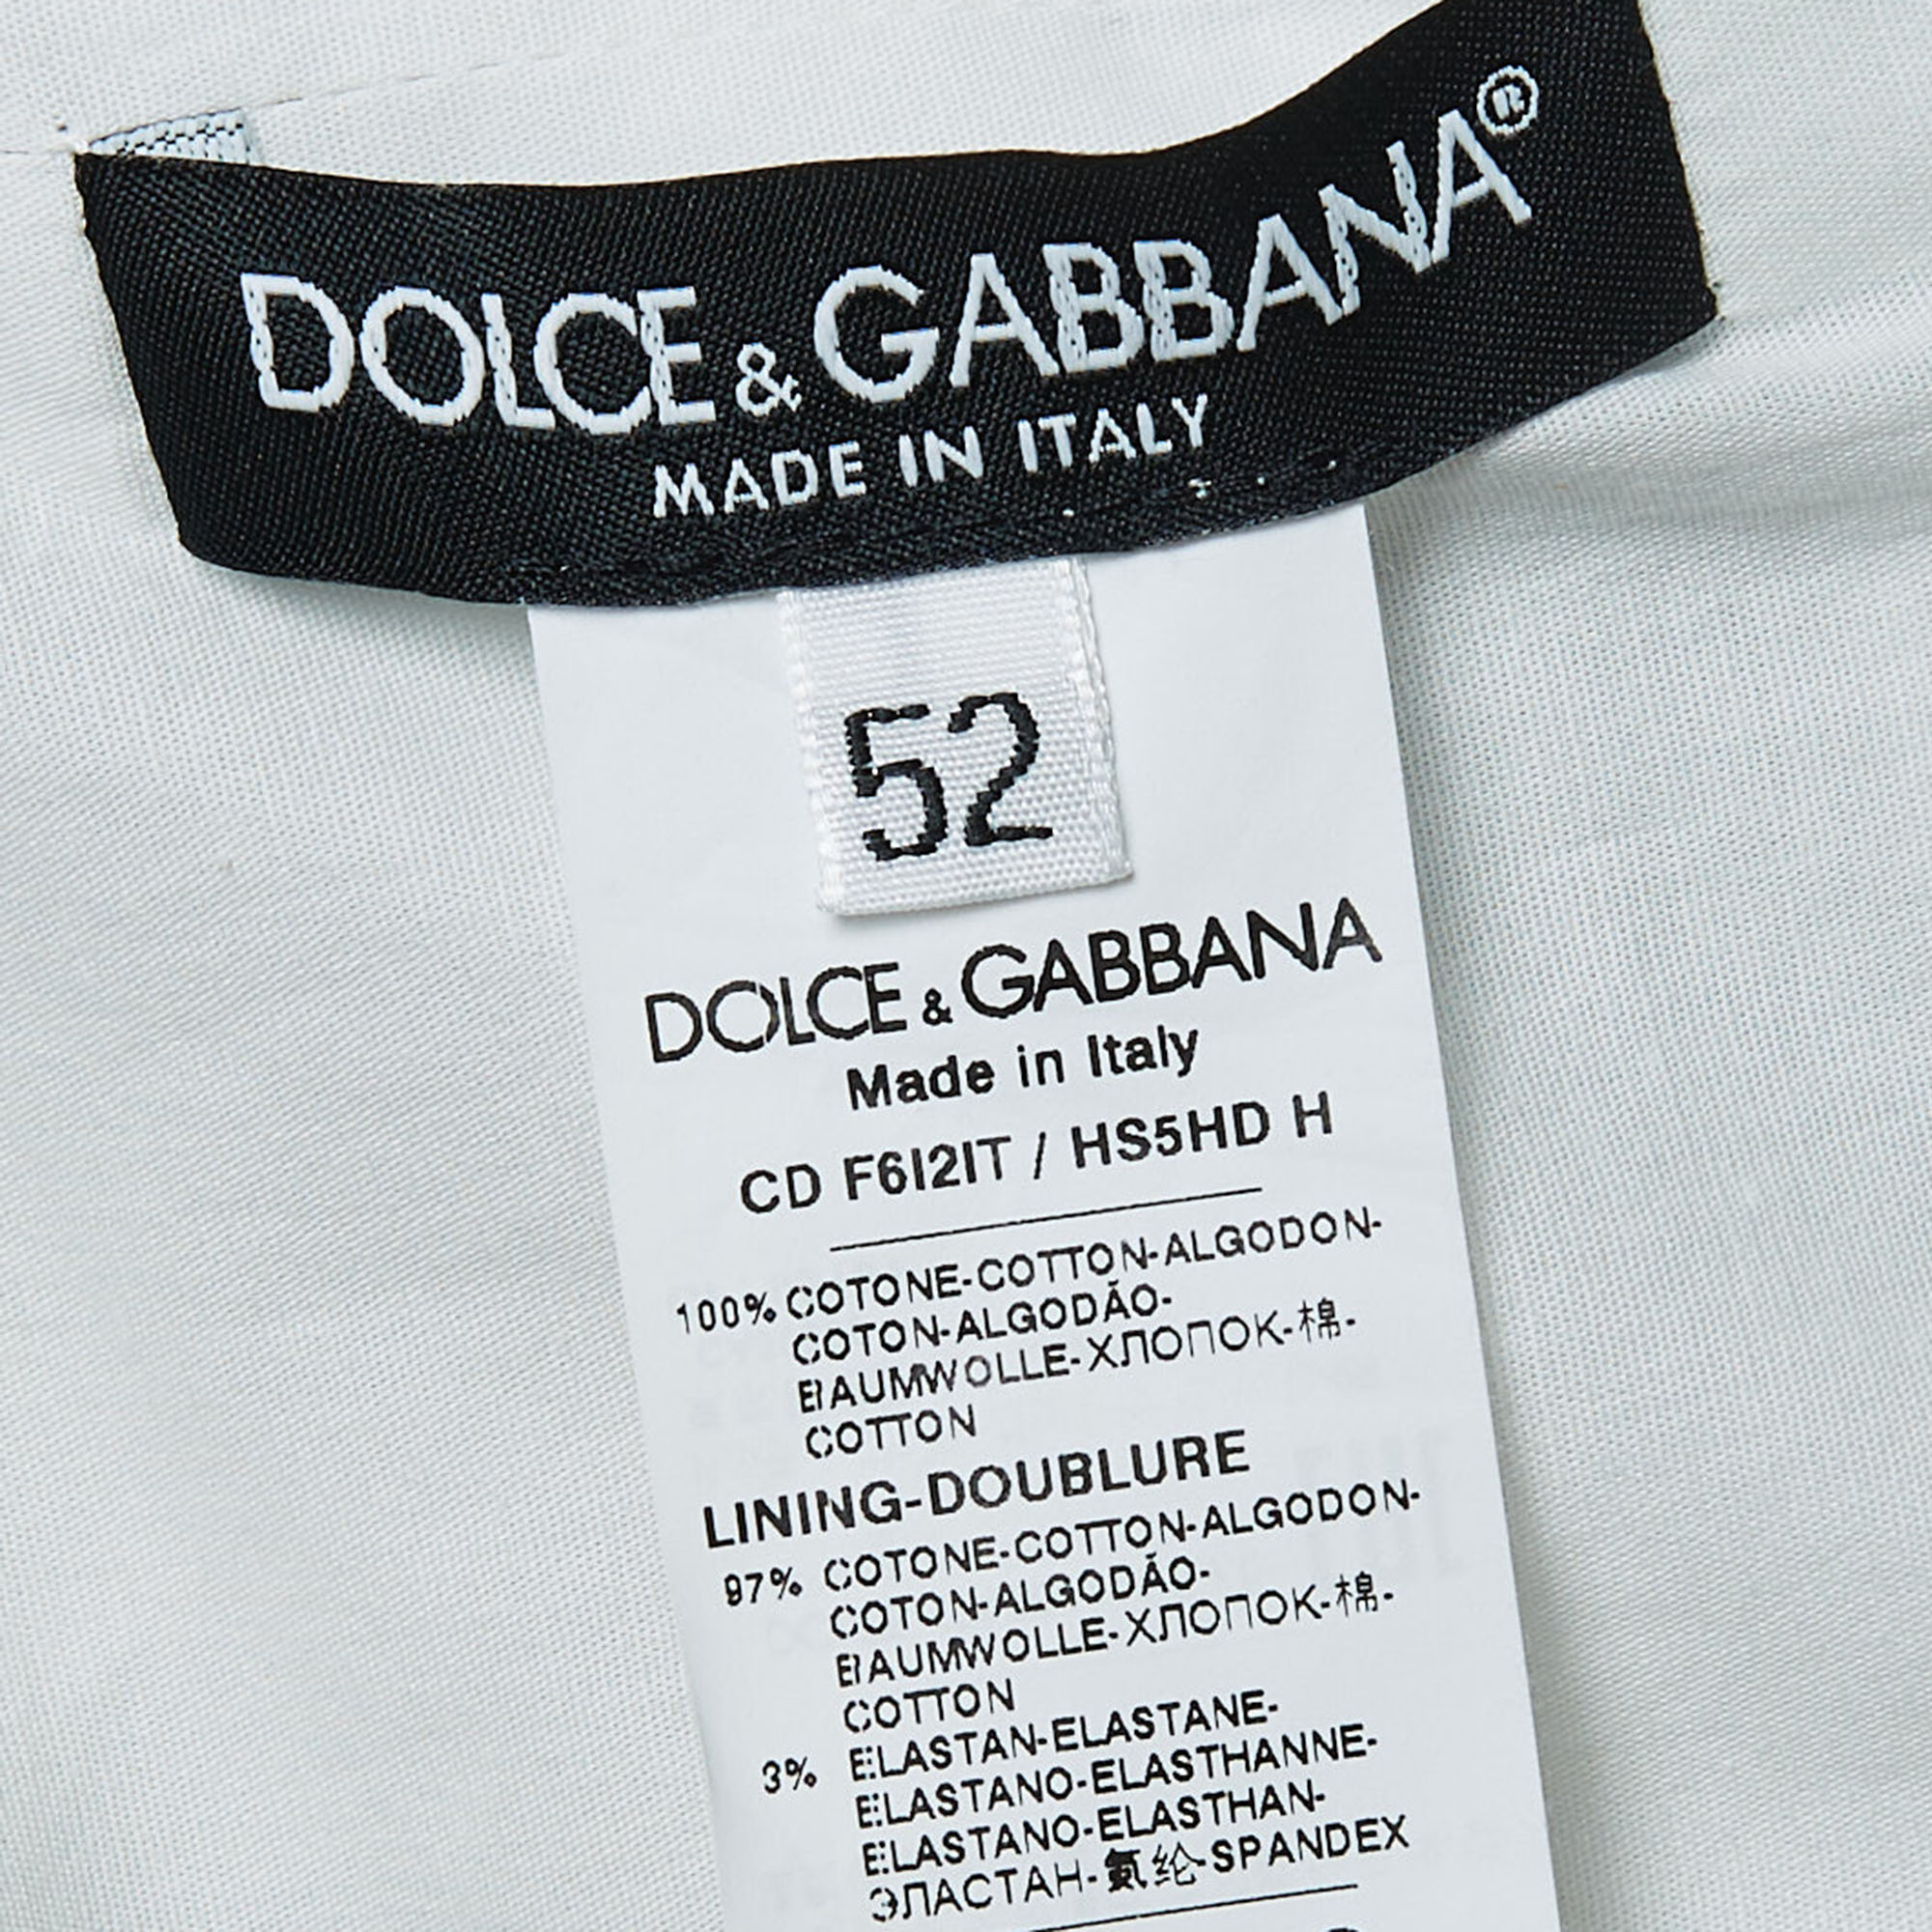 Dolce & Gabbana Green Leaves Print Cotton Halter Neck Short Dress 2XL